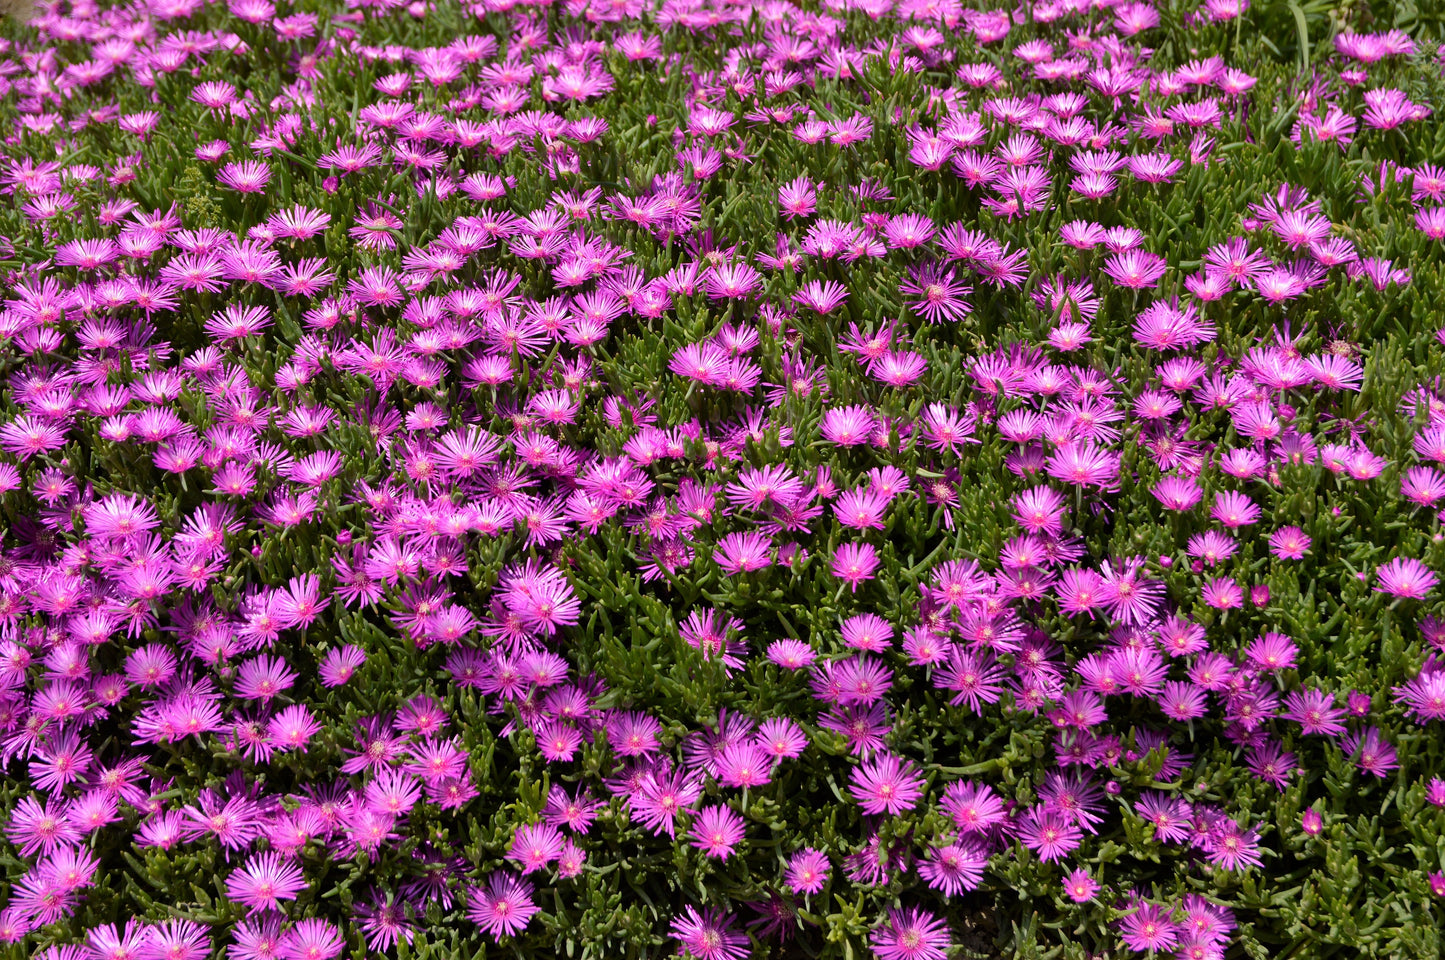 25 Table Mountain ICE PLANT Magenta Fuchsia Delosperma Cooperi Hardy Pink Carpet Flower Seeds